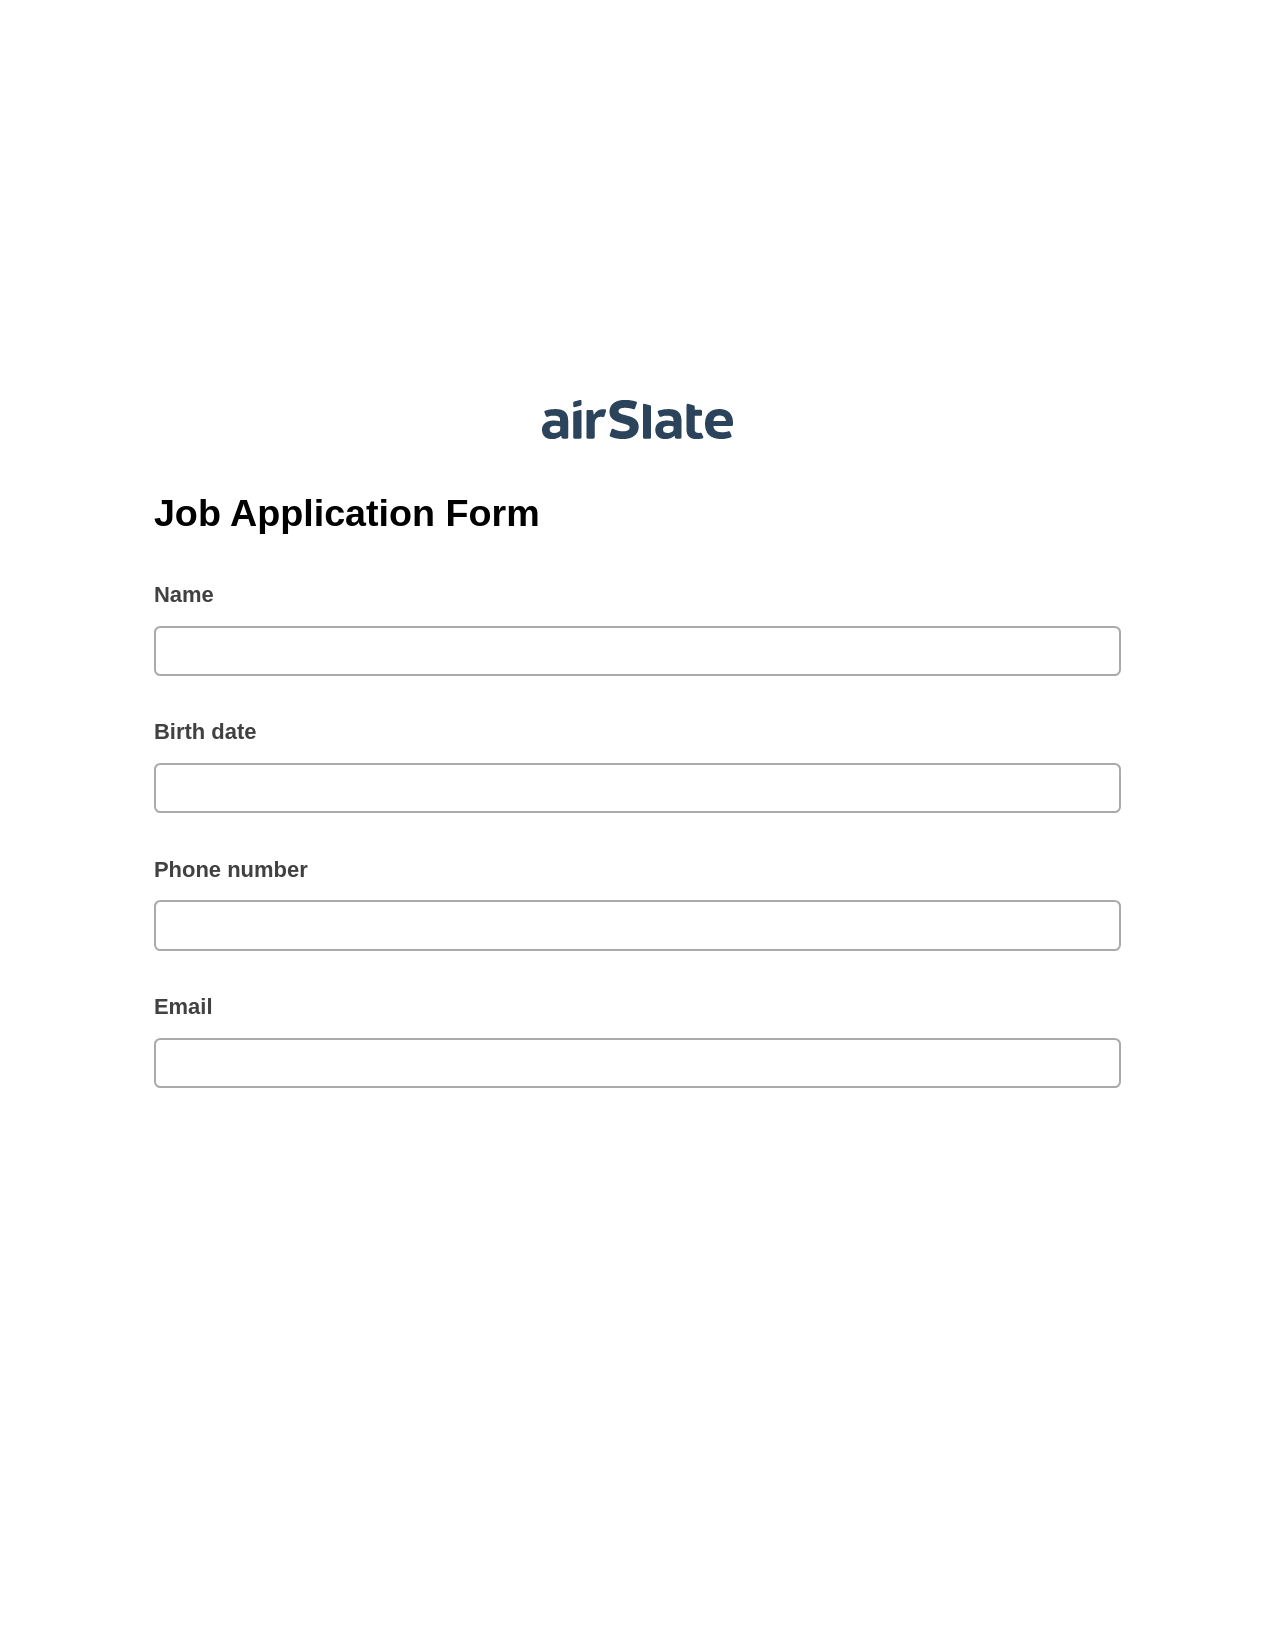 Multirole Job Application Form Pre-fill from Salesforce Record Bot, Audit Trail Bot, Slack Notification Postfinish Bot